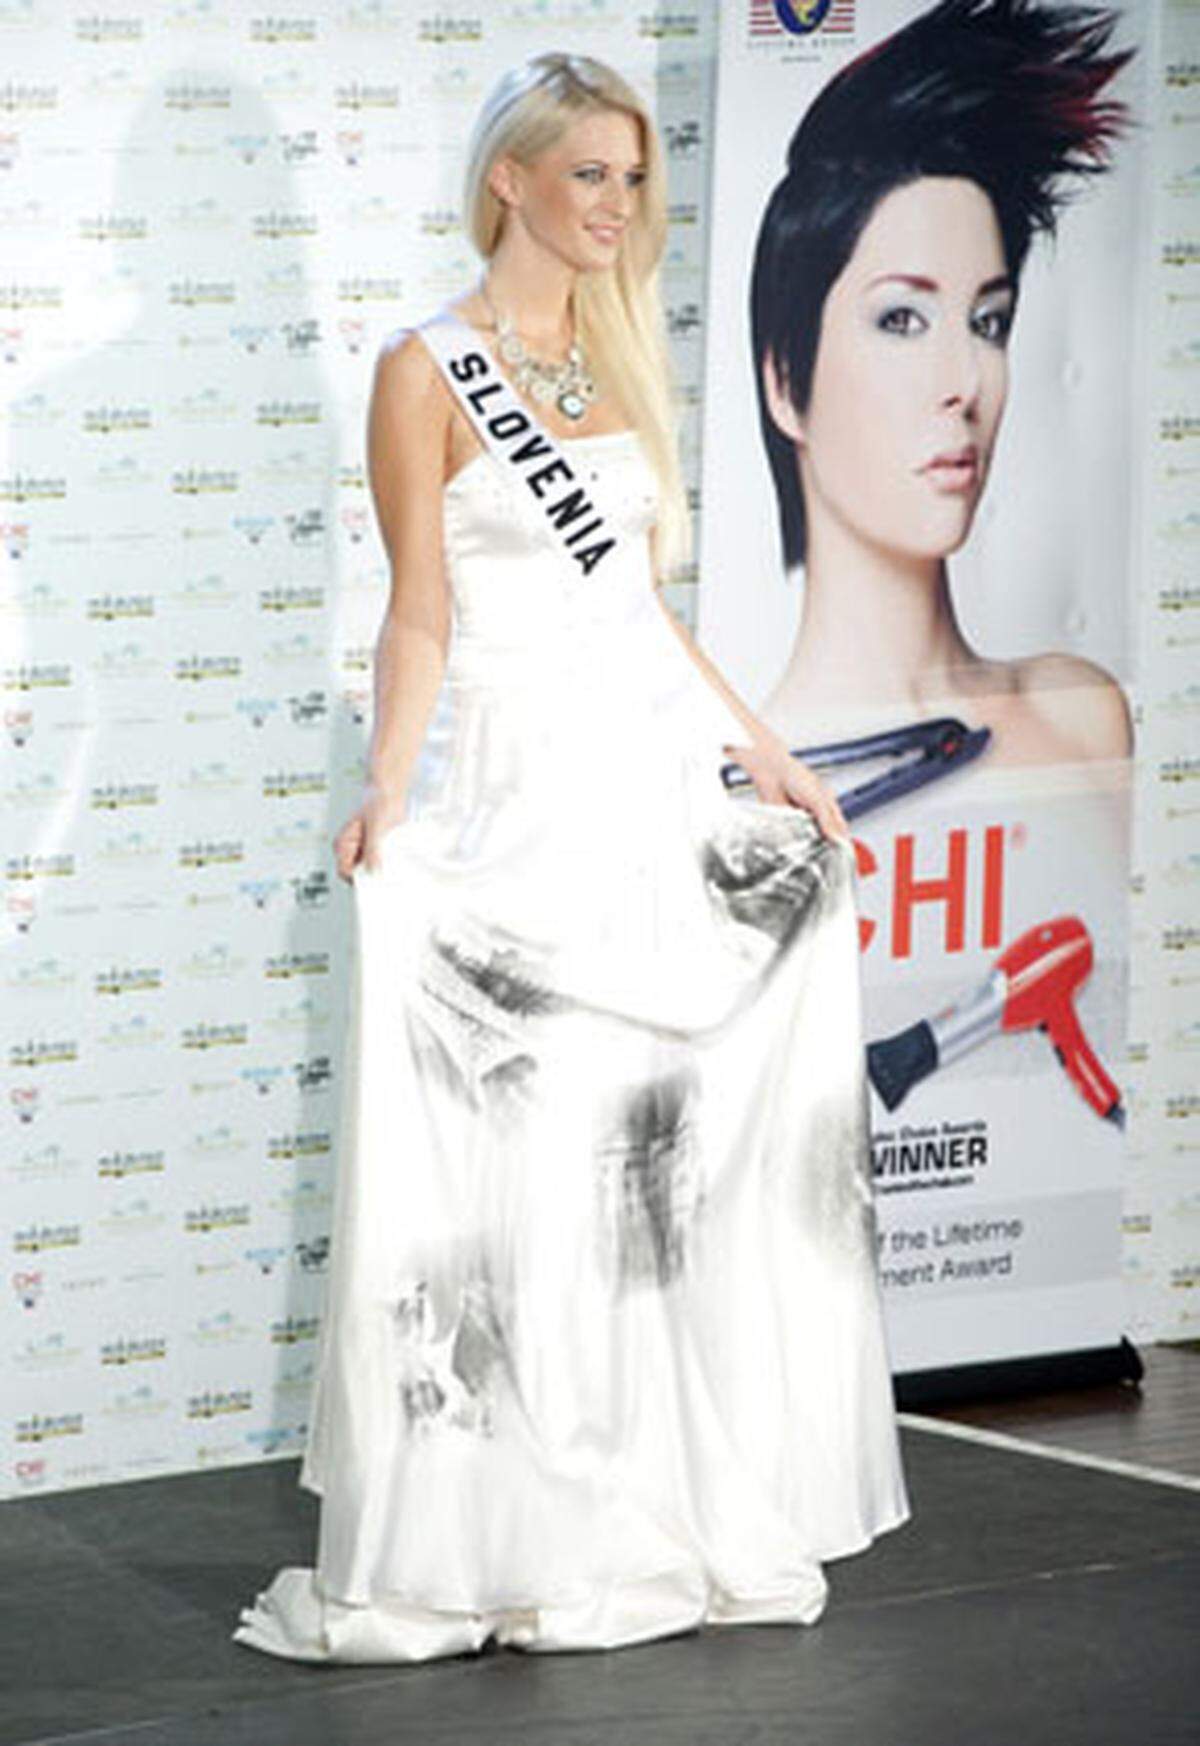 Marika Savsek, Miss Slovenia